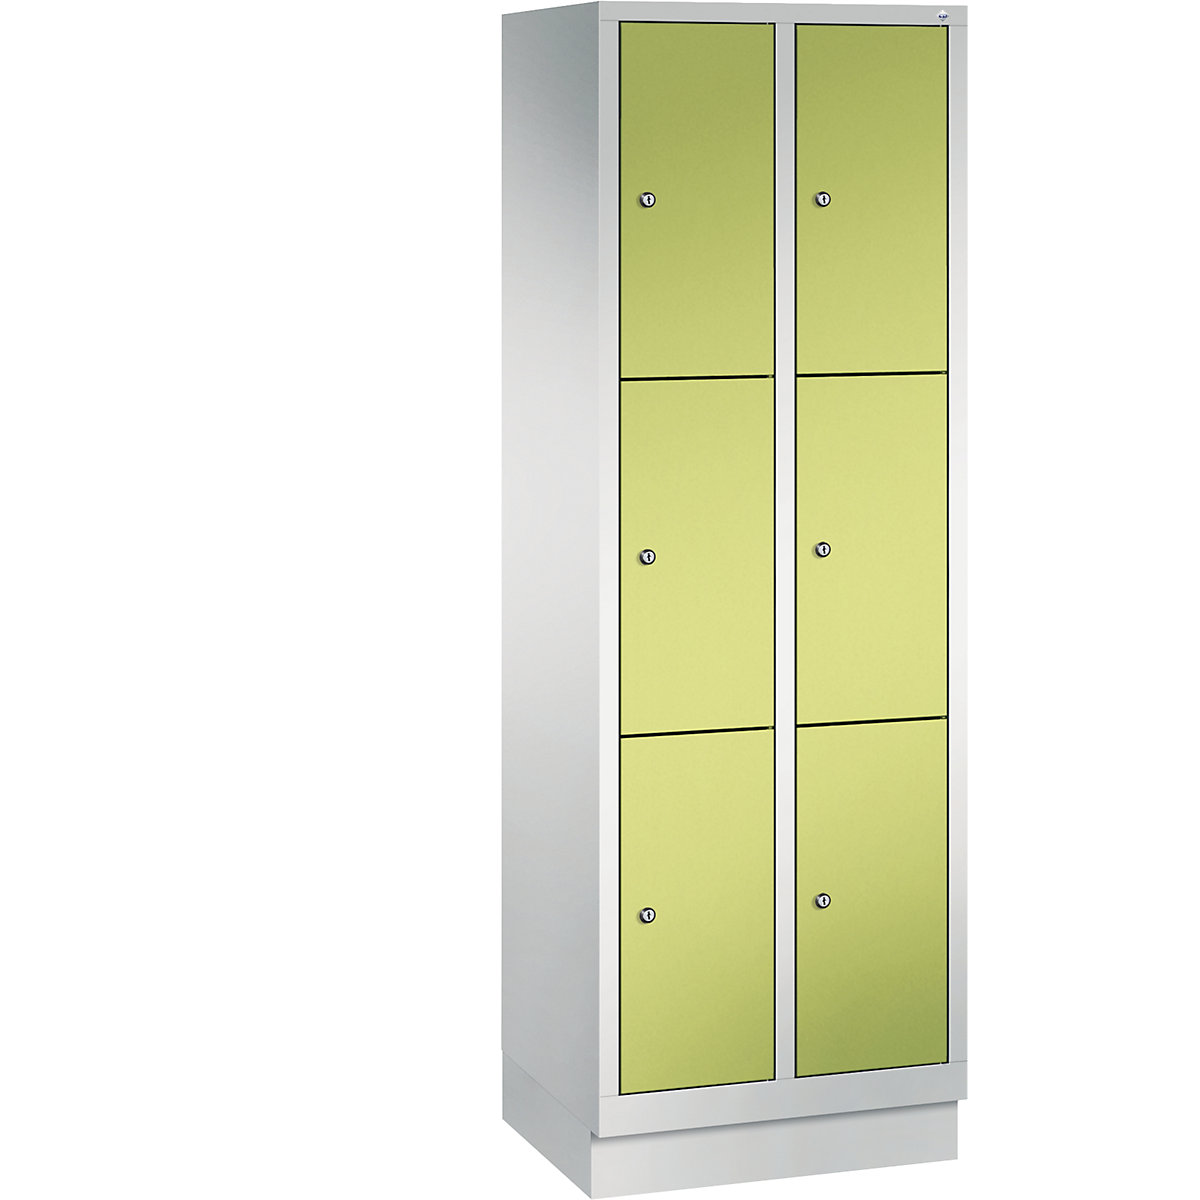 CLASSIC locker unit with plinth – C+P, 2 compartments, 3 shelf compartments each, compartment width 300 mm, light grey / viridian green-3